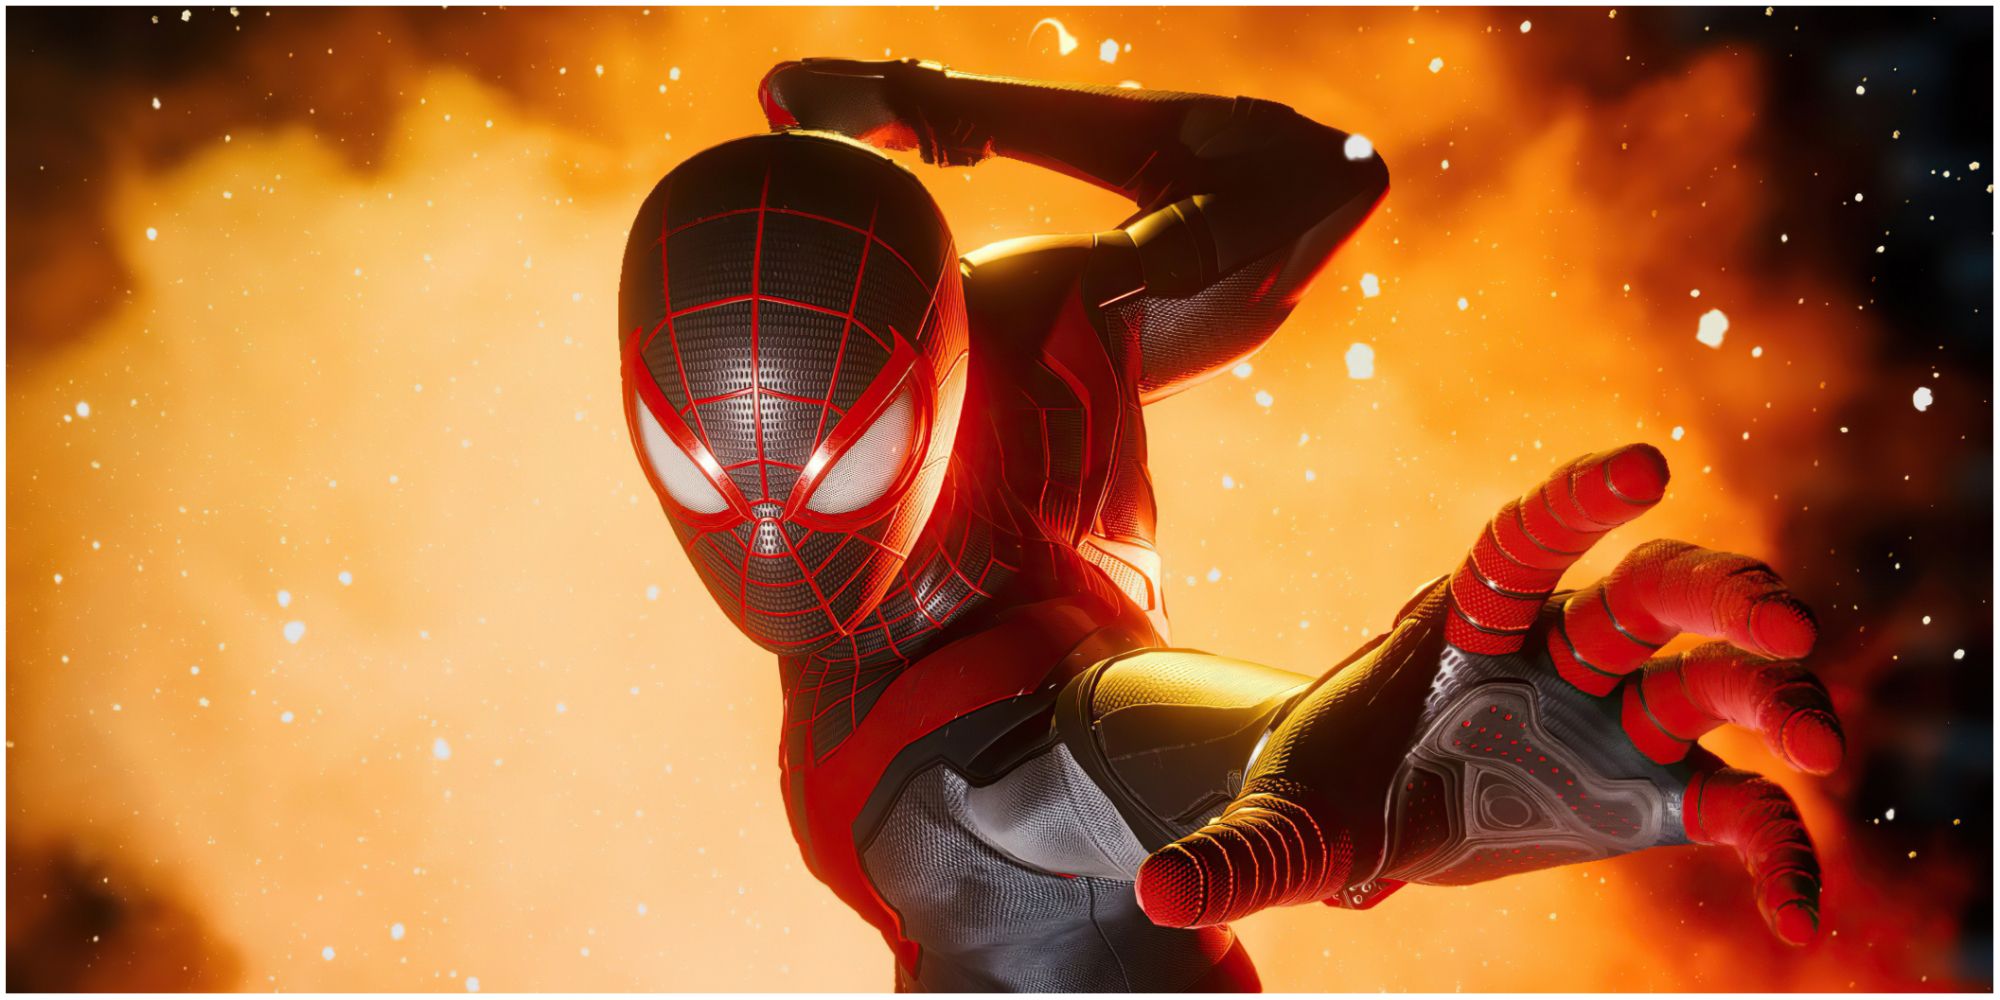 Key art from Marvel's Spider-Man Miles Morales